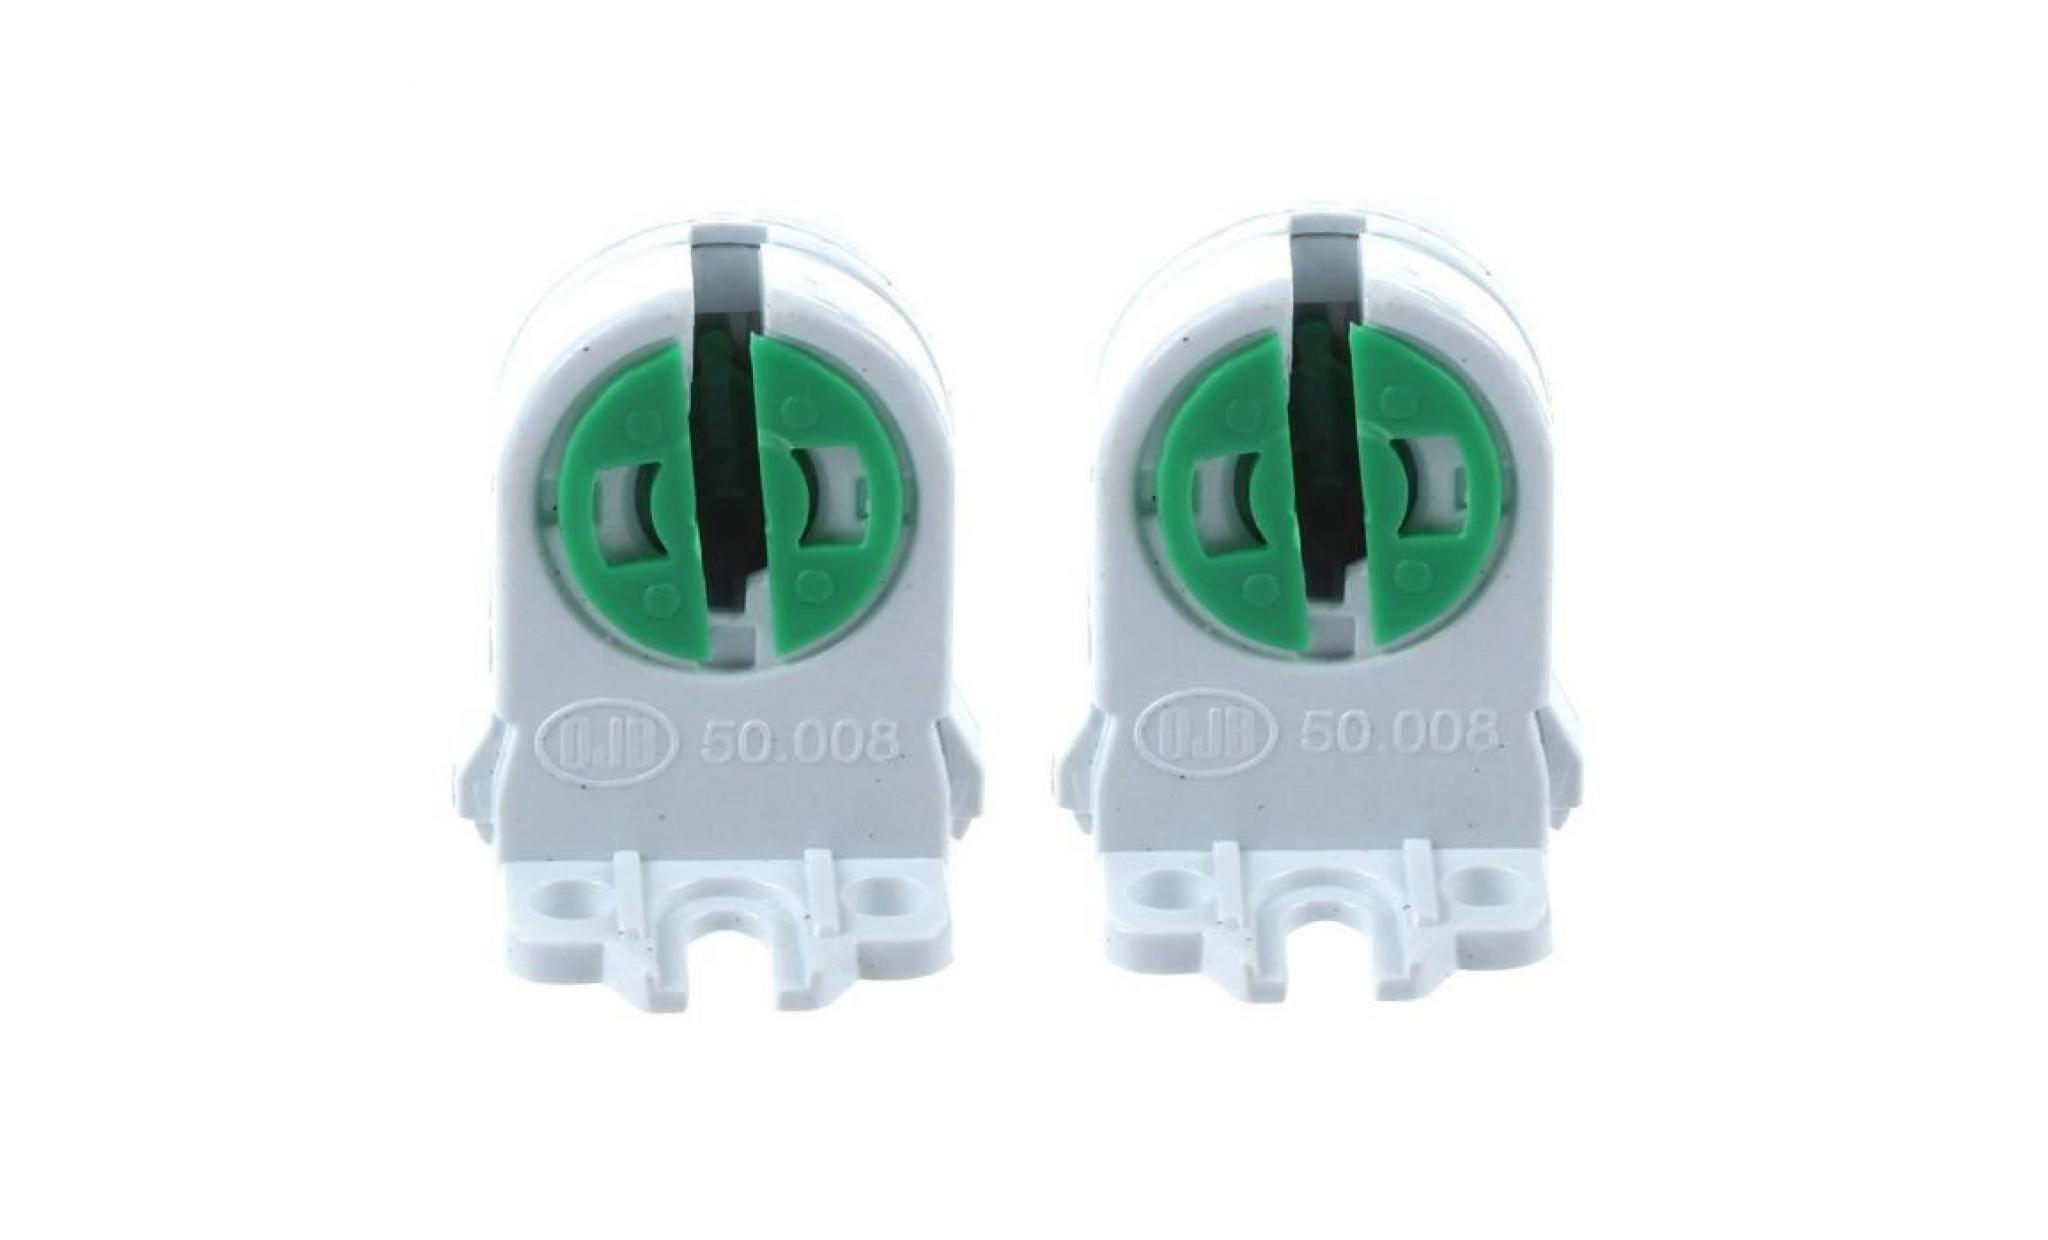 2 pcslampe fluorescente sockets support pour t5 tube lumiere